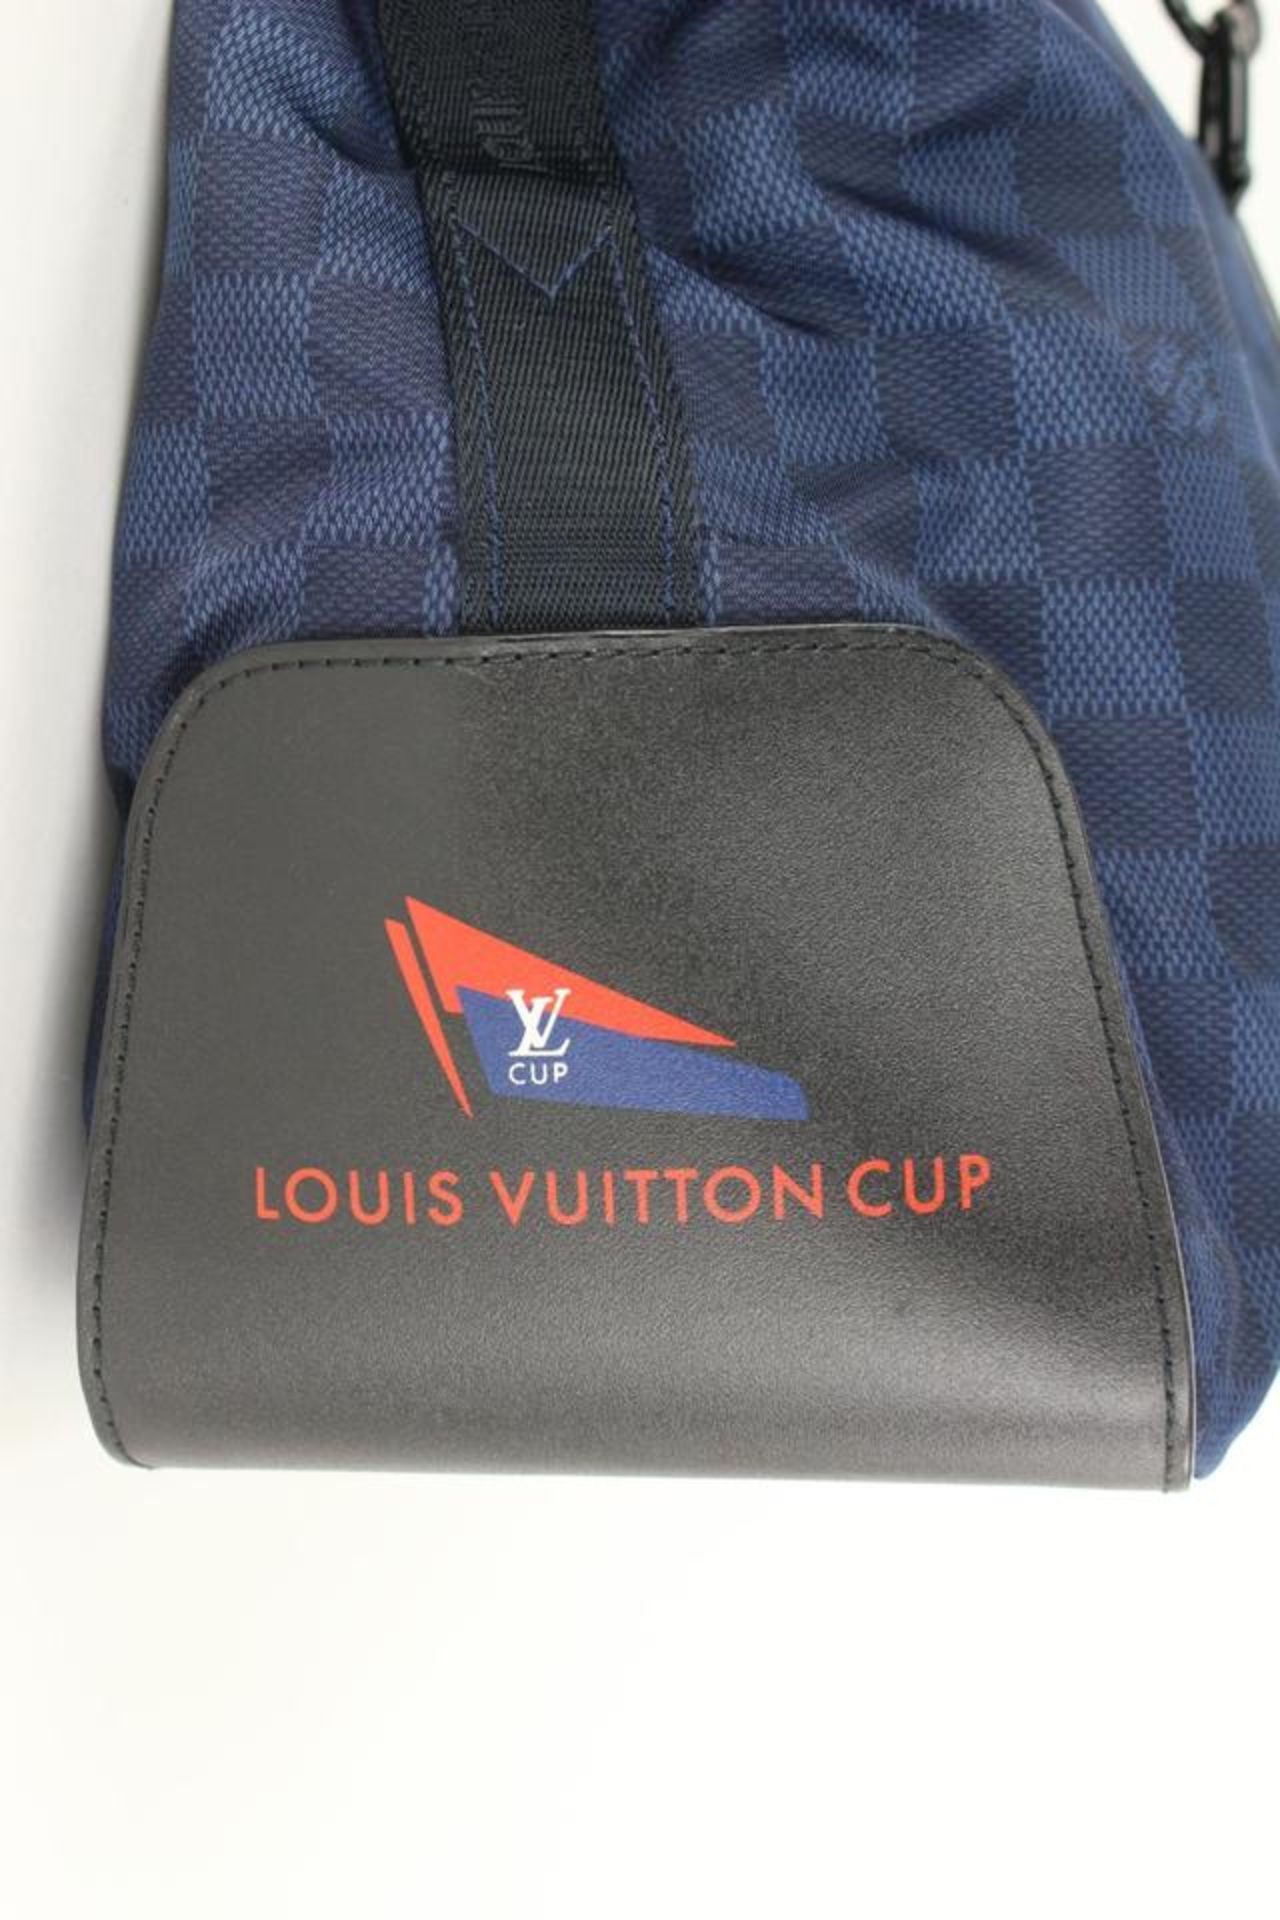 LOUIS VUITTON RARE LV CUP BLUE DAMIER WATERPROOF CONVERTIBLE MESSENGER - Image 7 of 11